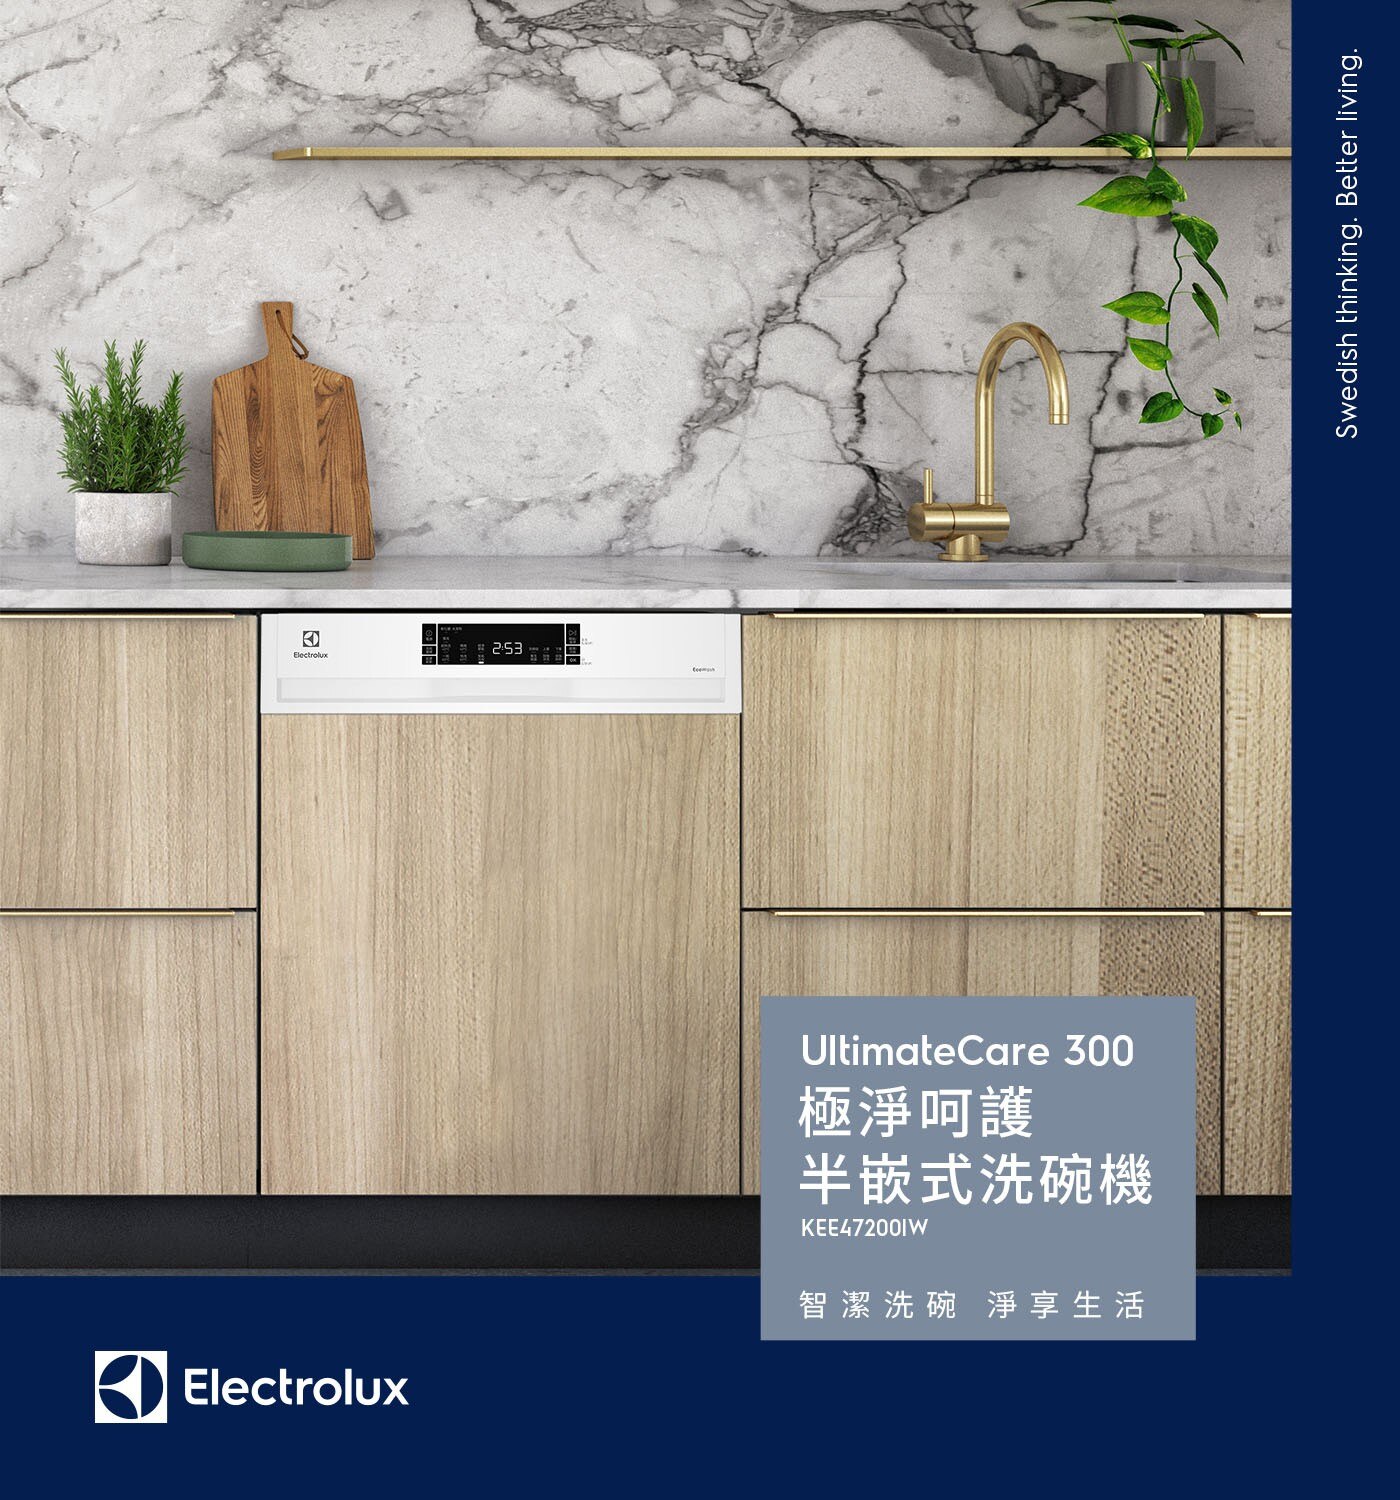 Electrolux伊萊克斯60公分半嵌式洗碗機13人份 KEE47200IW，Super Active 強效烘乾系統，碗盤乾燥更有效率。